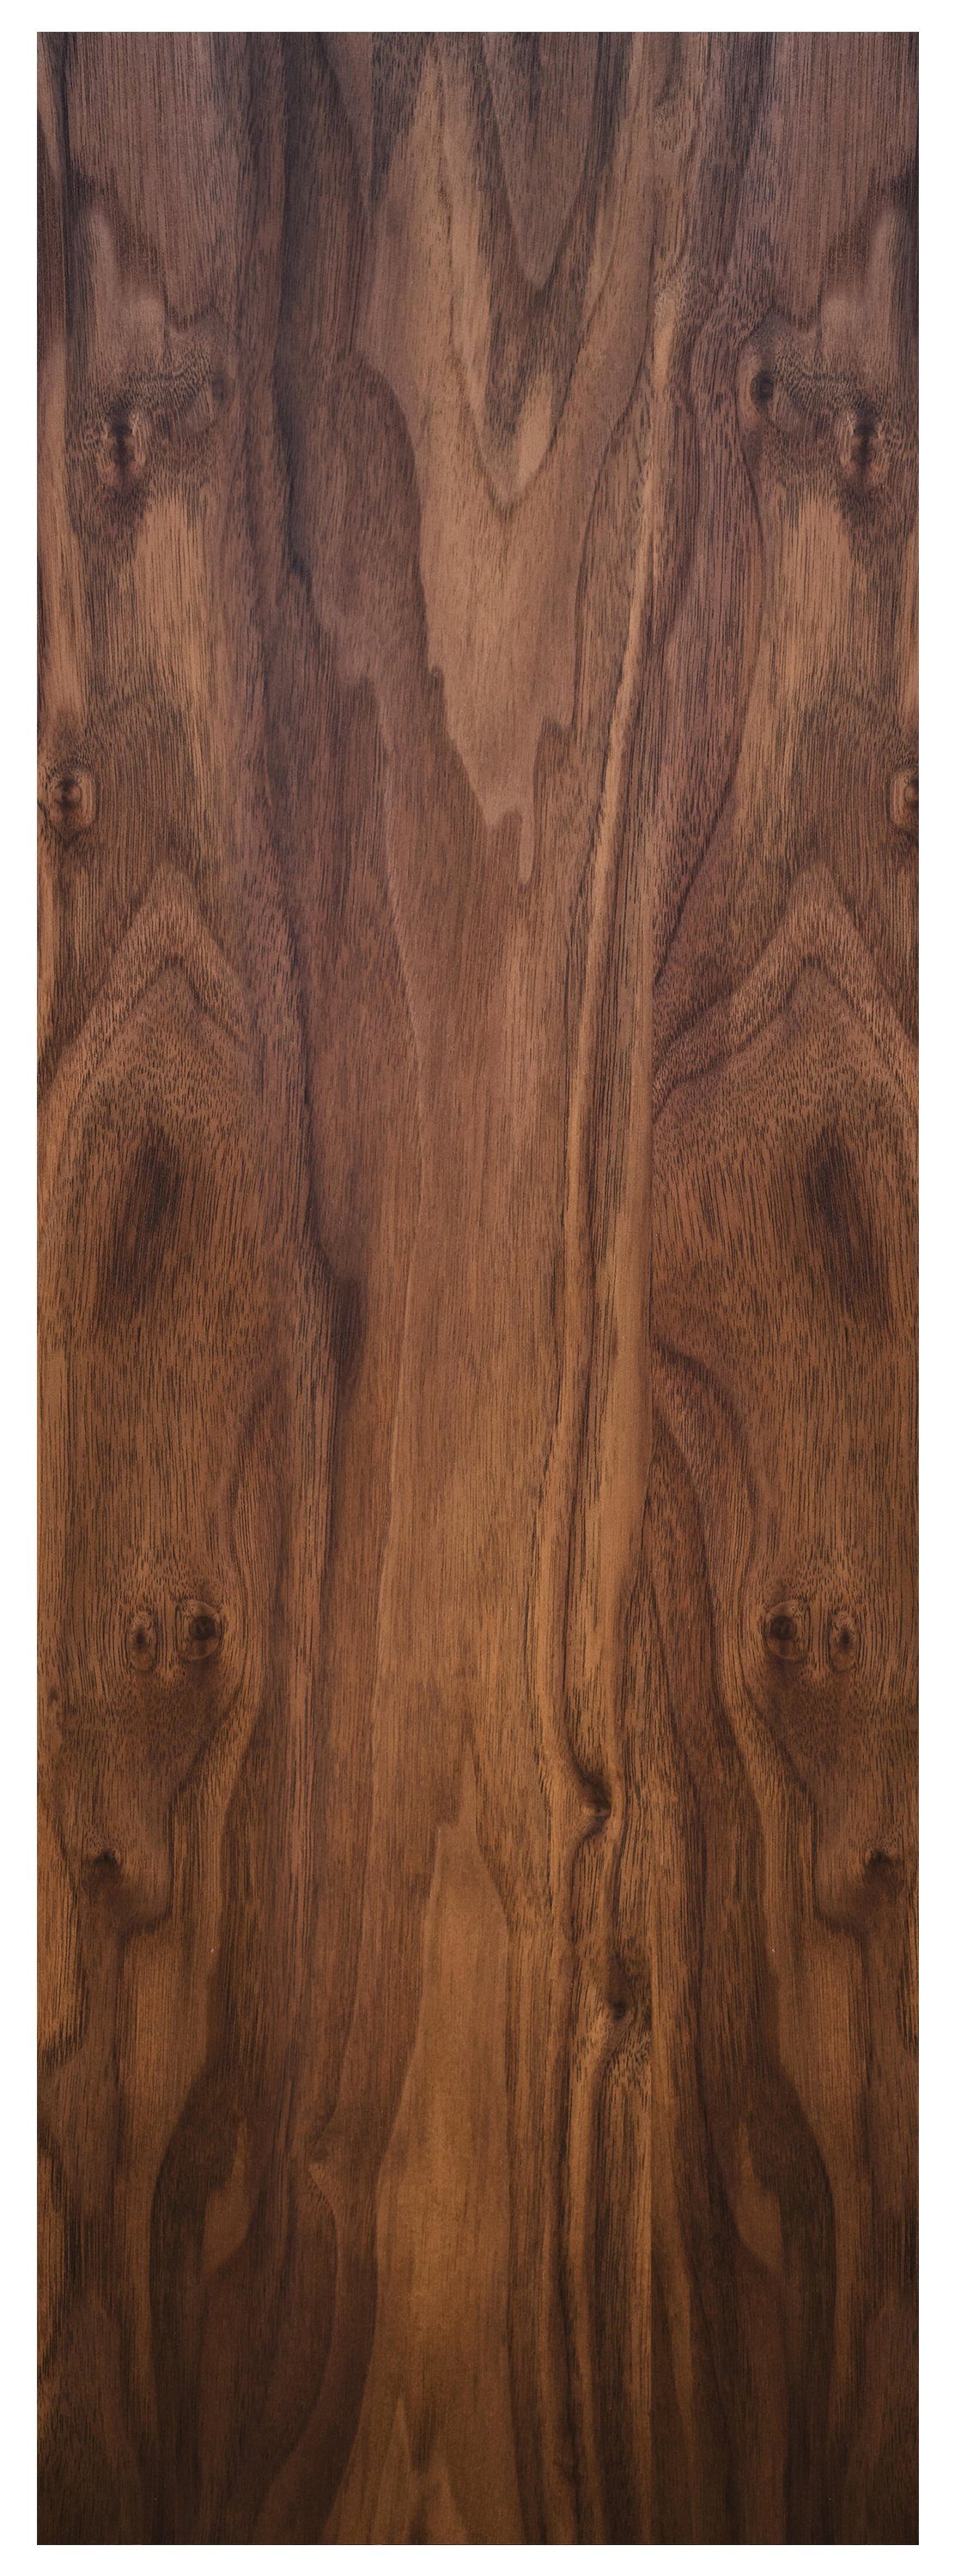 wandmotiv24 Türtapete rustikales Holz, Wandverkleidung, glatt, Fototapete, Wandtapete, Motivtapete, matt, selbstklebende Dekorfolie